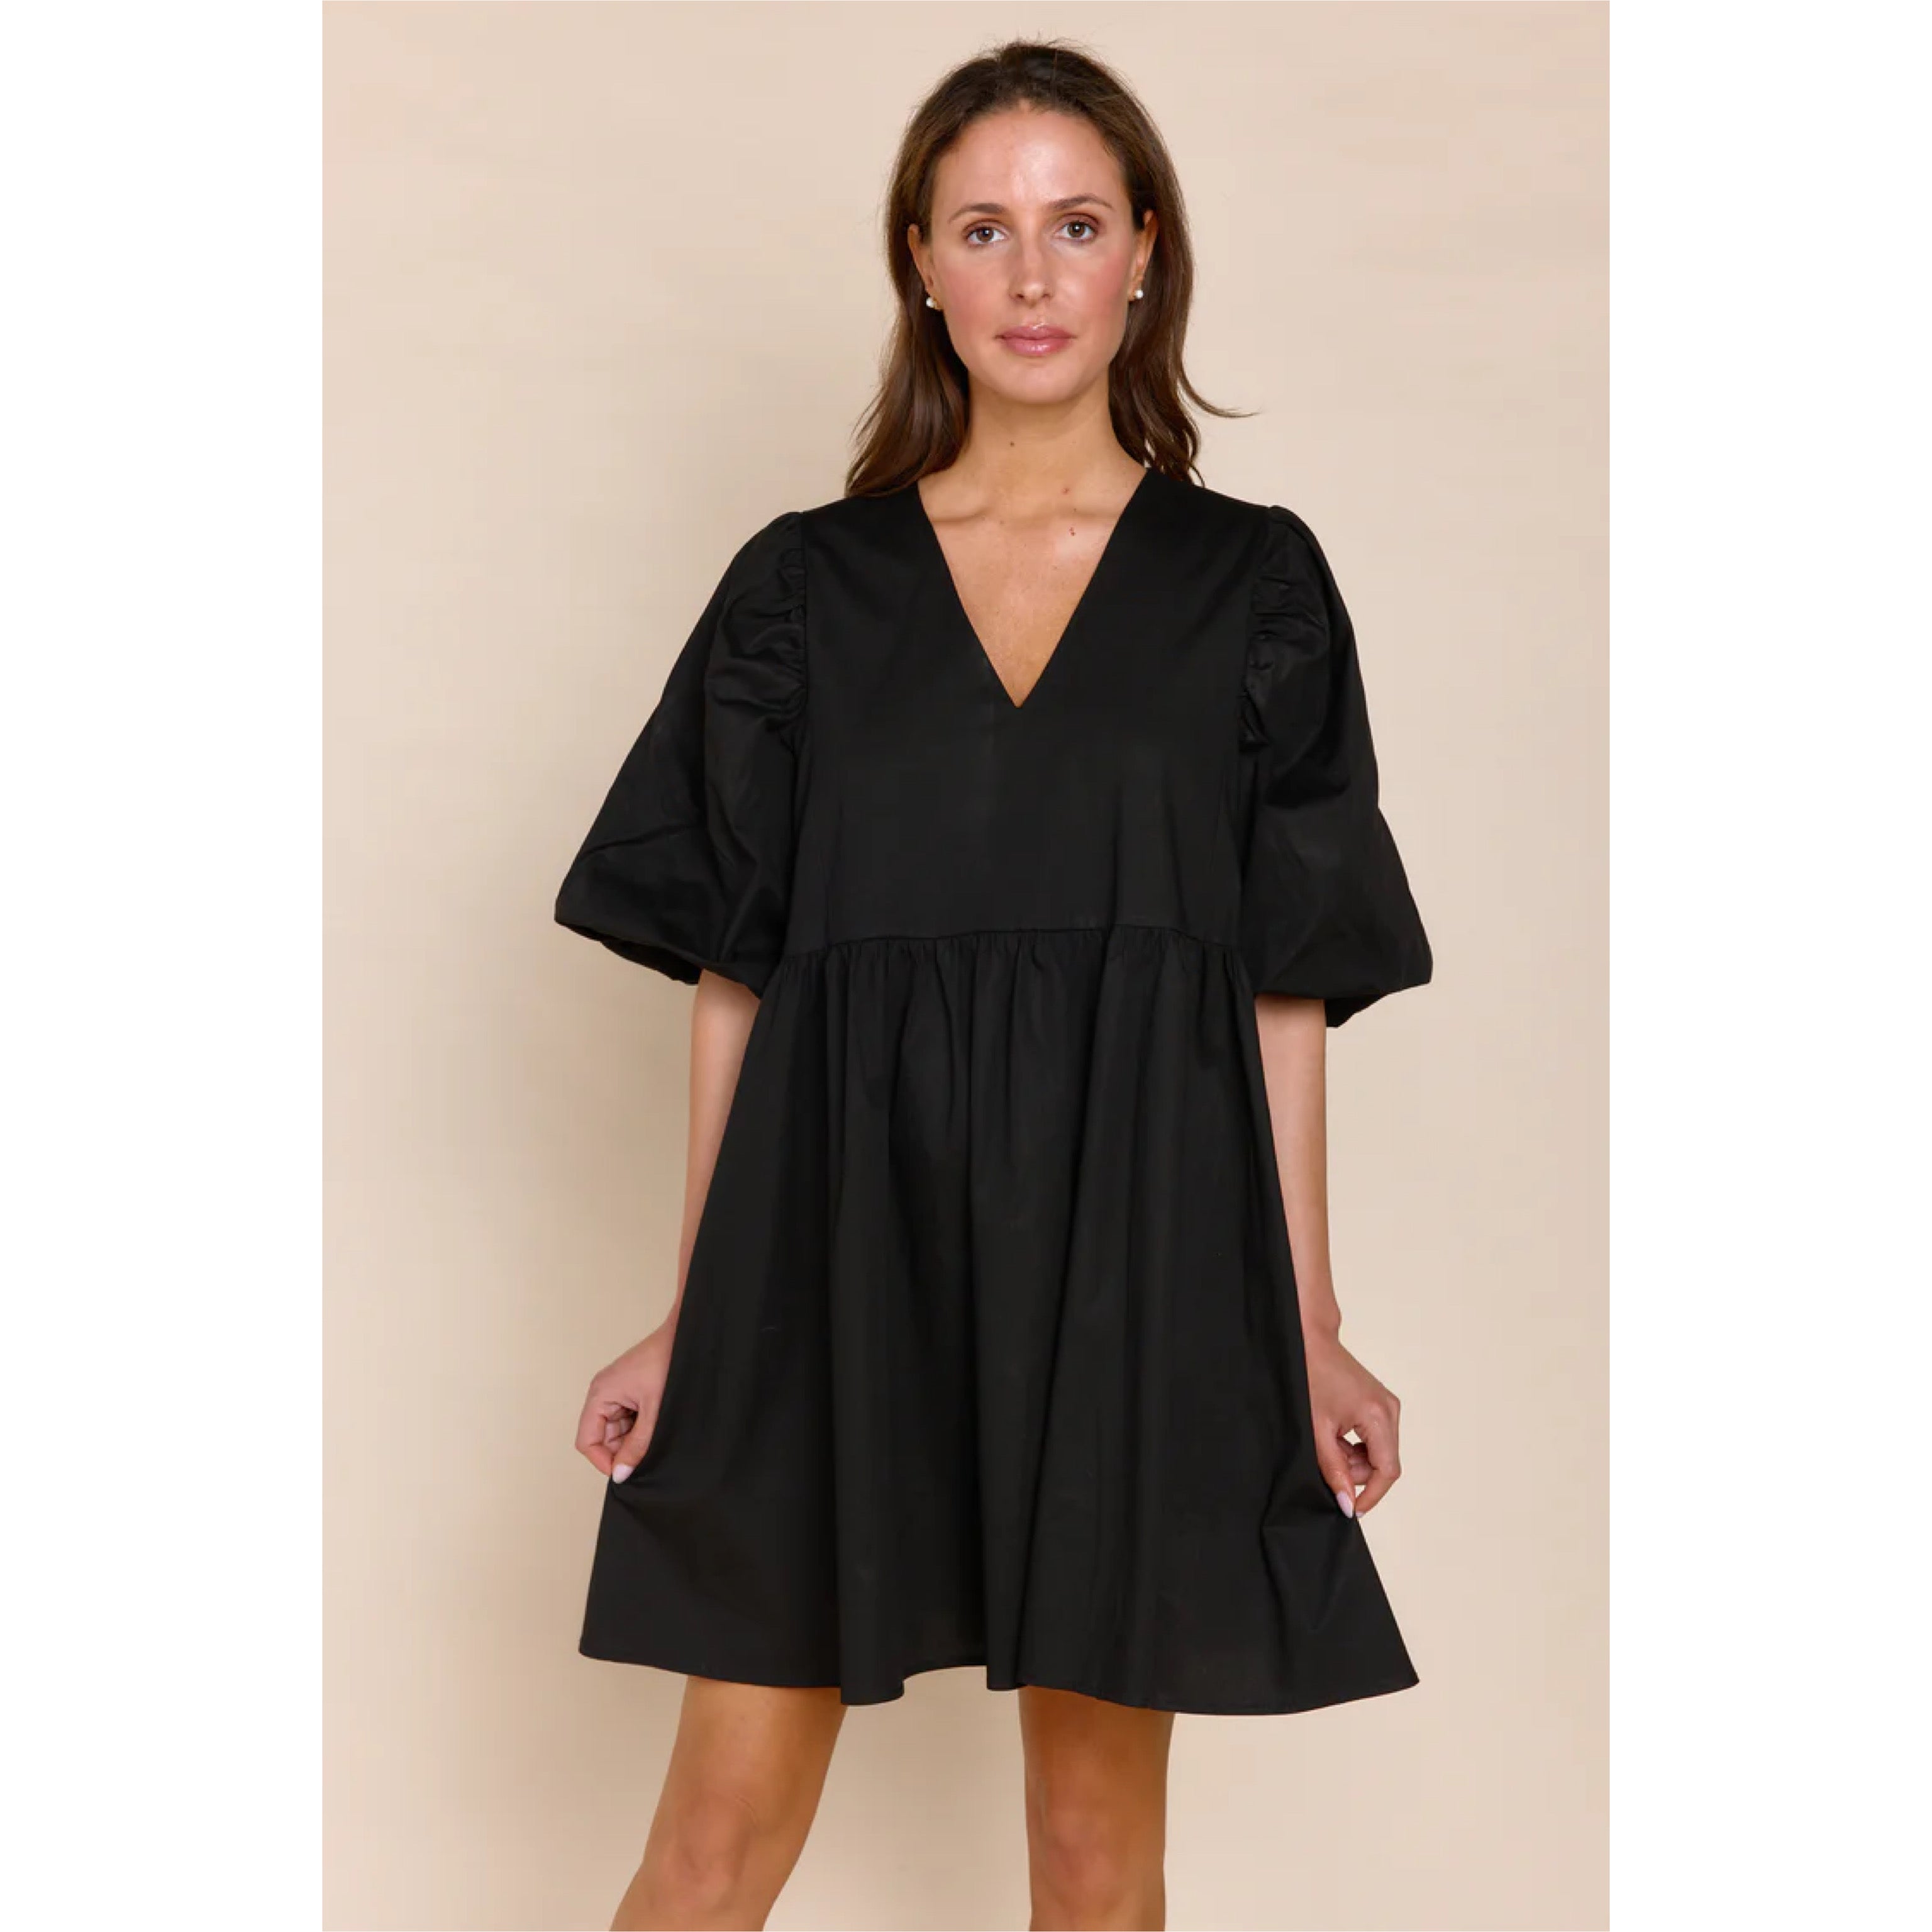 Sofia black puff-sleeve dress, size S